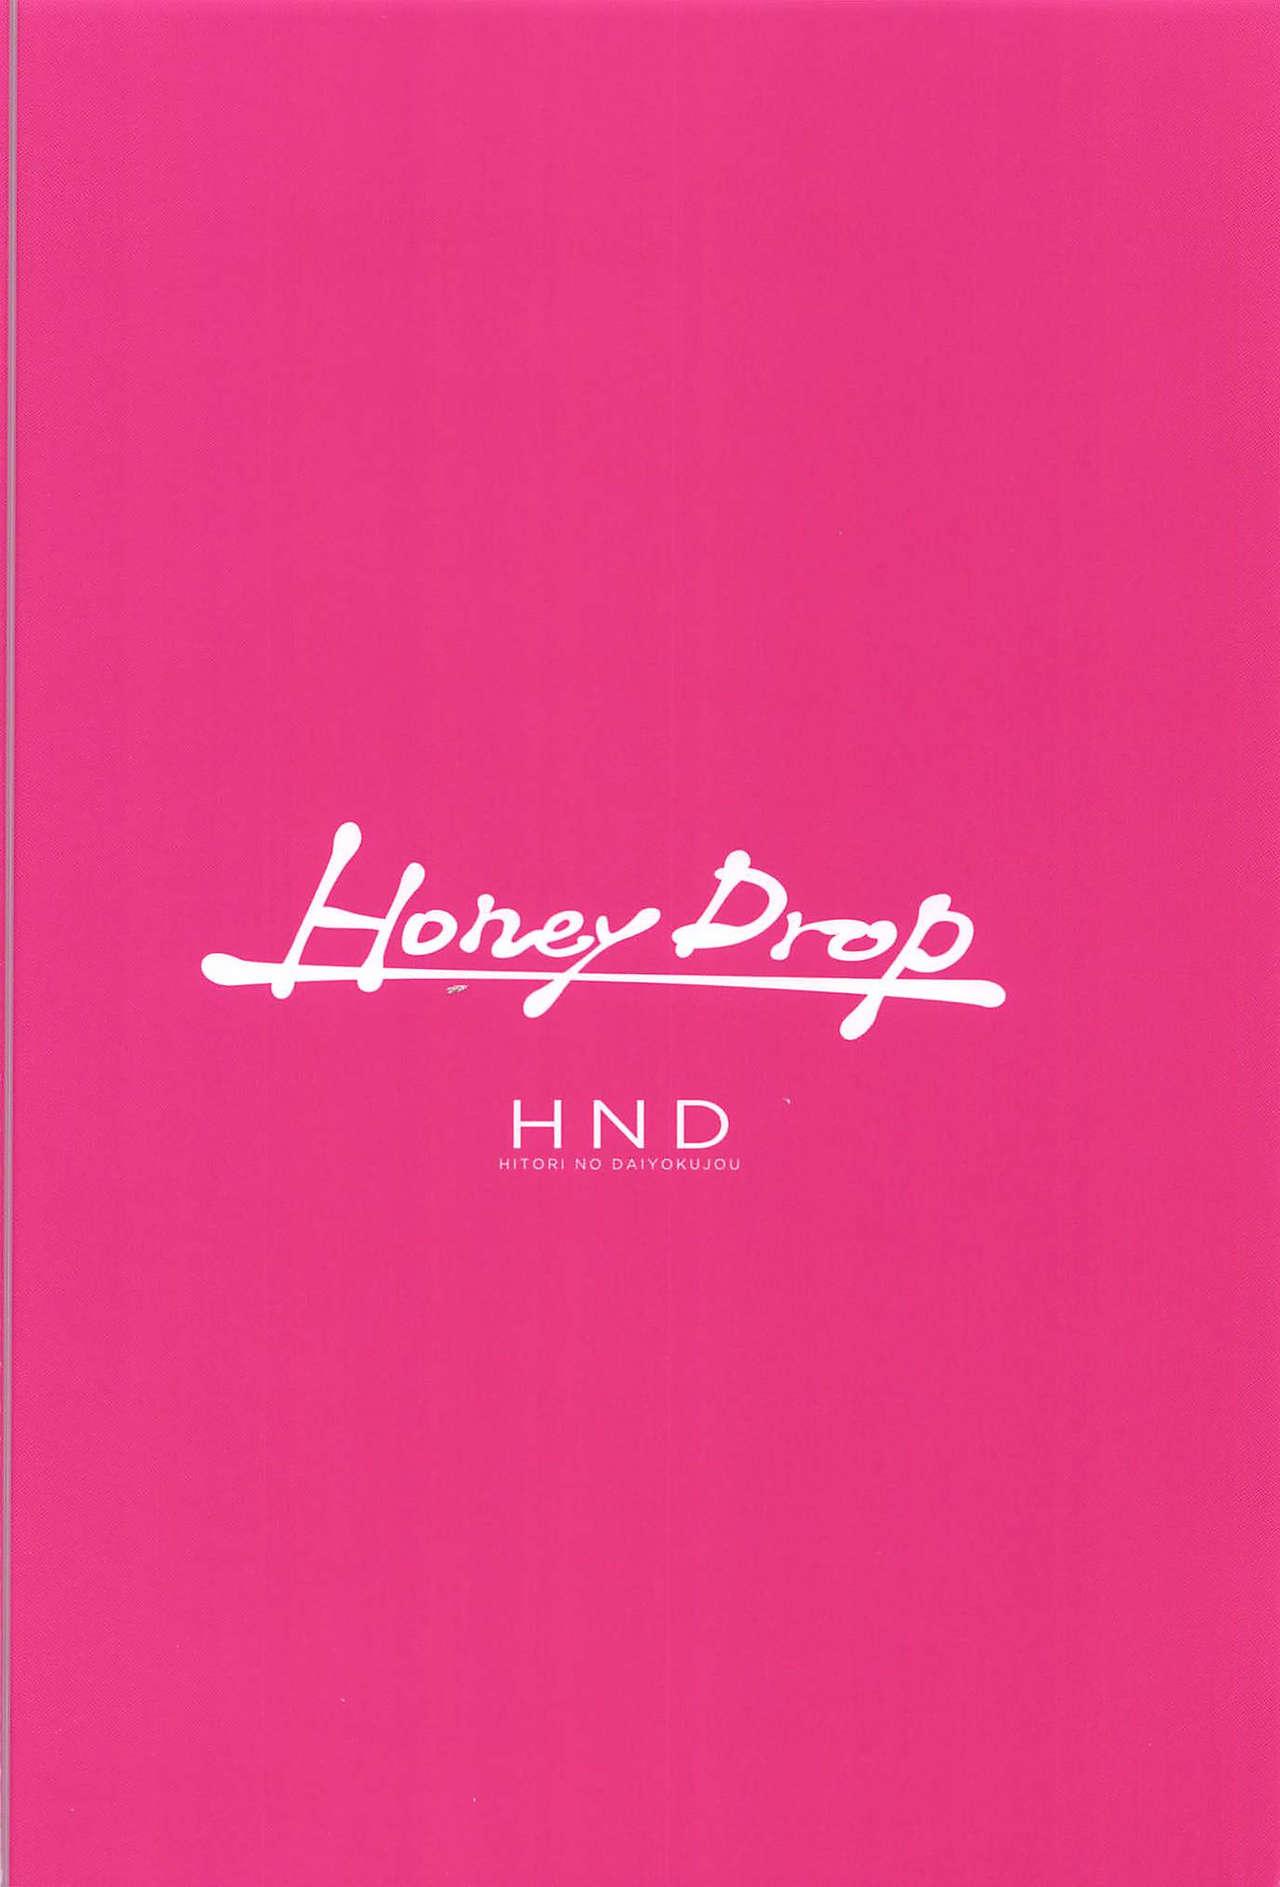 Honey Drop 26